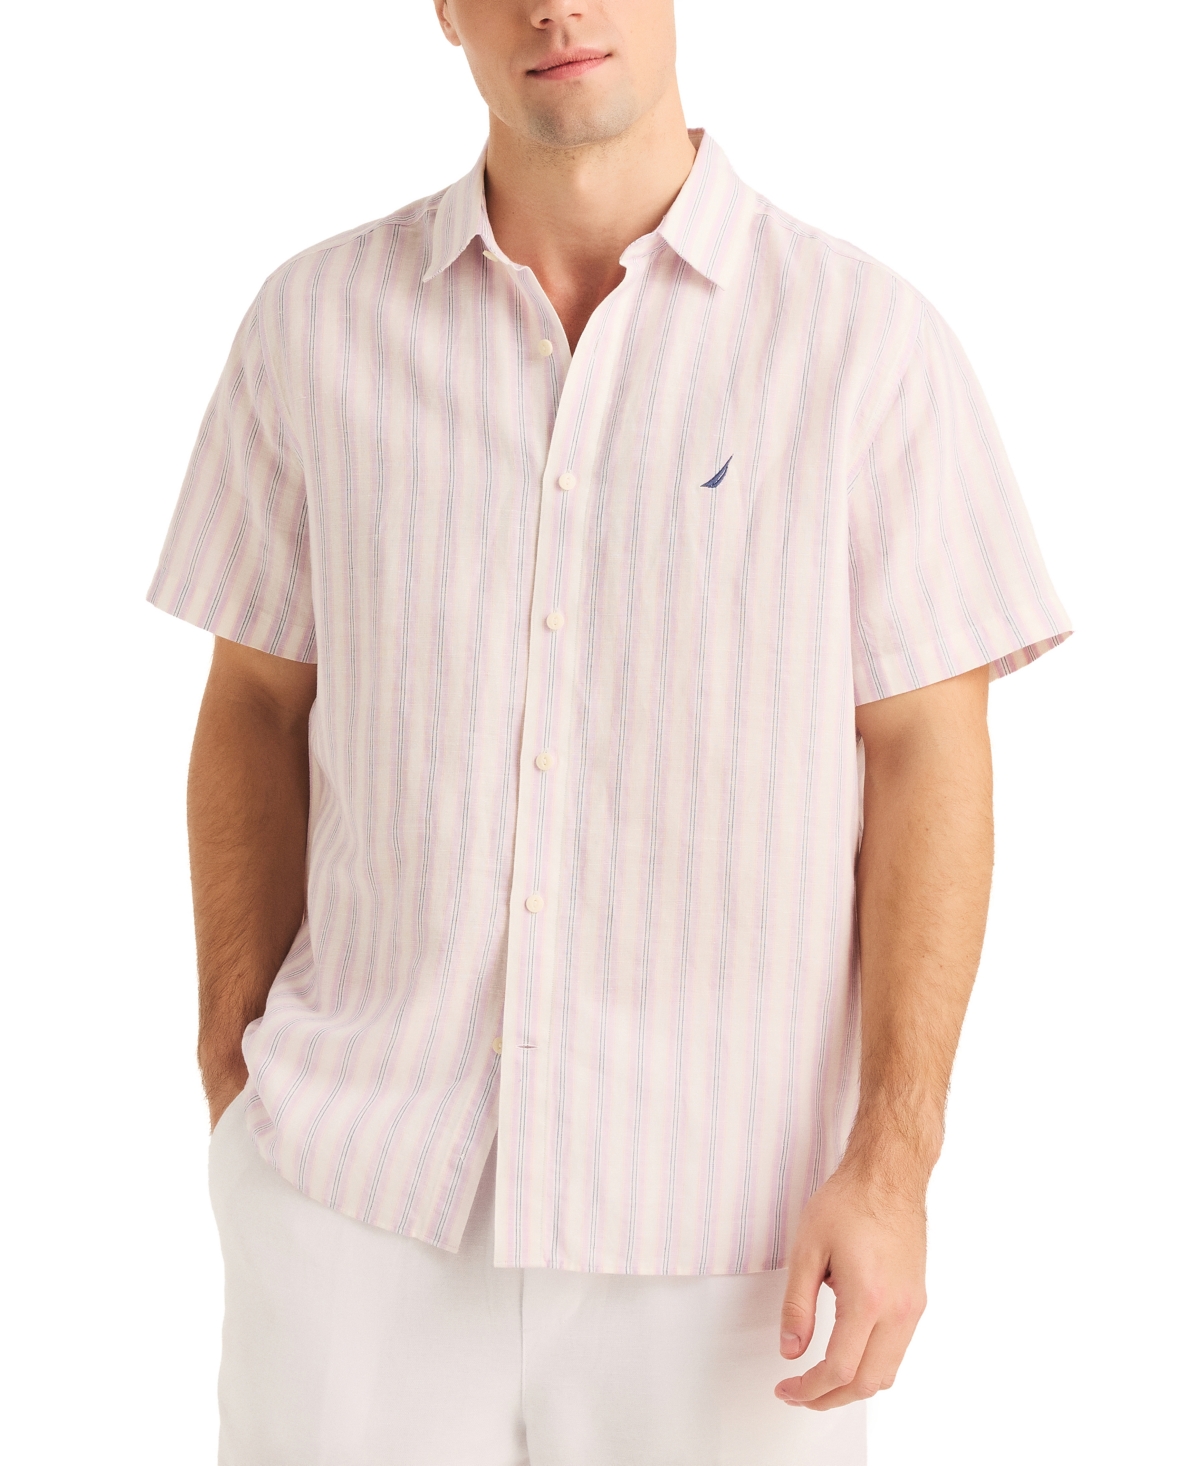 Men's Miami Vice x Nautica Striped Short Sleeve Linen Blend Shirt - Sail White